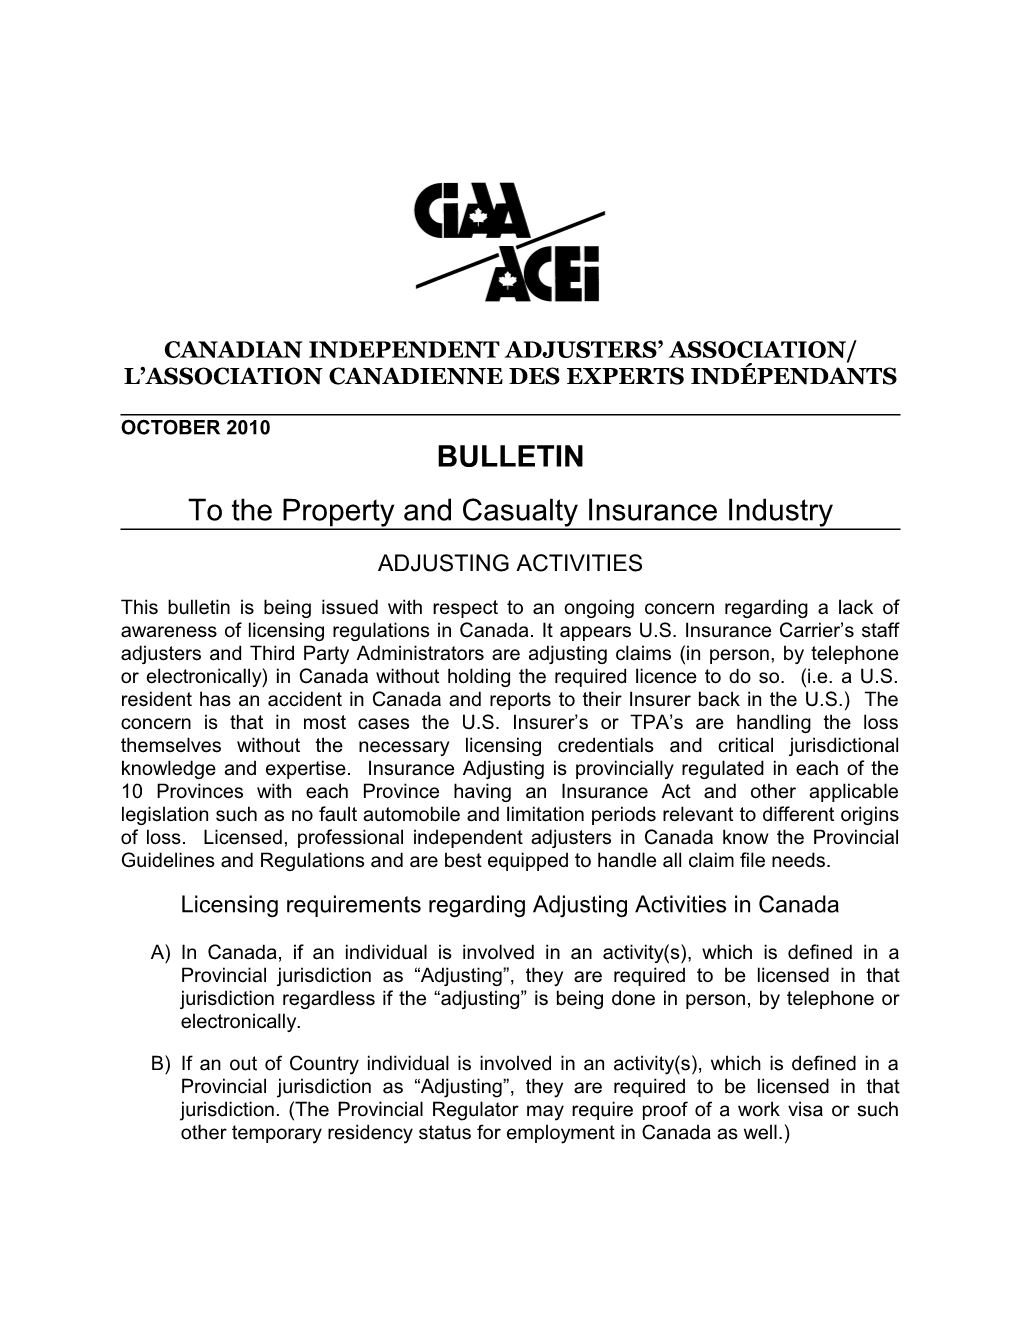 Canadian Independent Adjusters Association